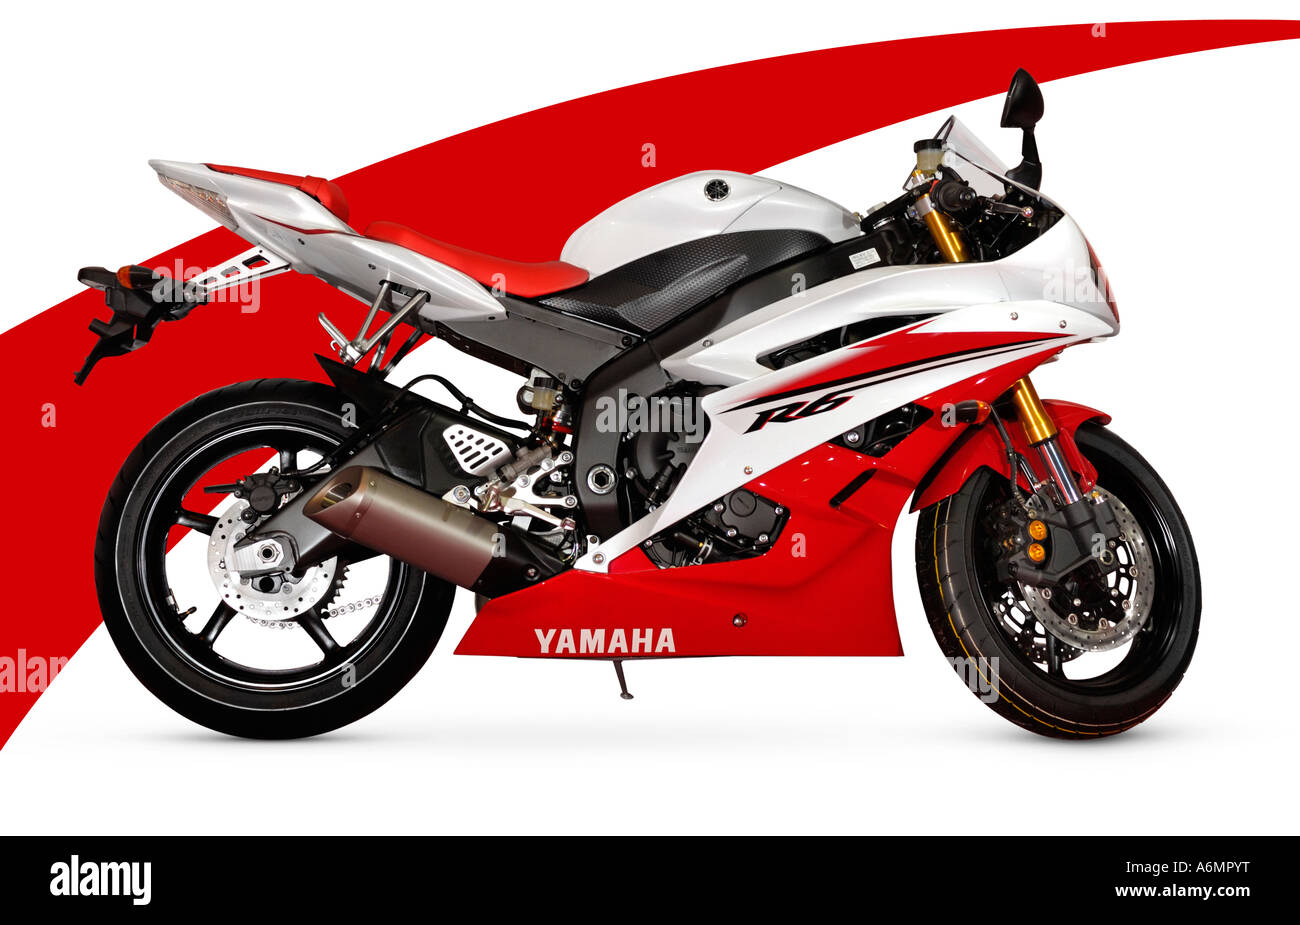 Yamaha r6 bikes hi-res stock photography and images - Alamy